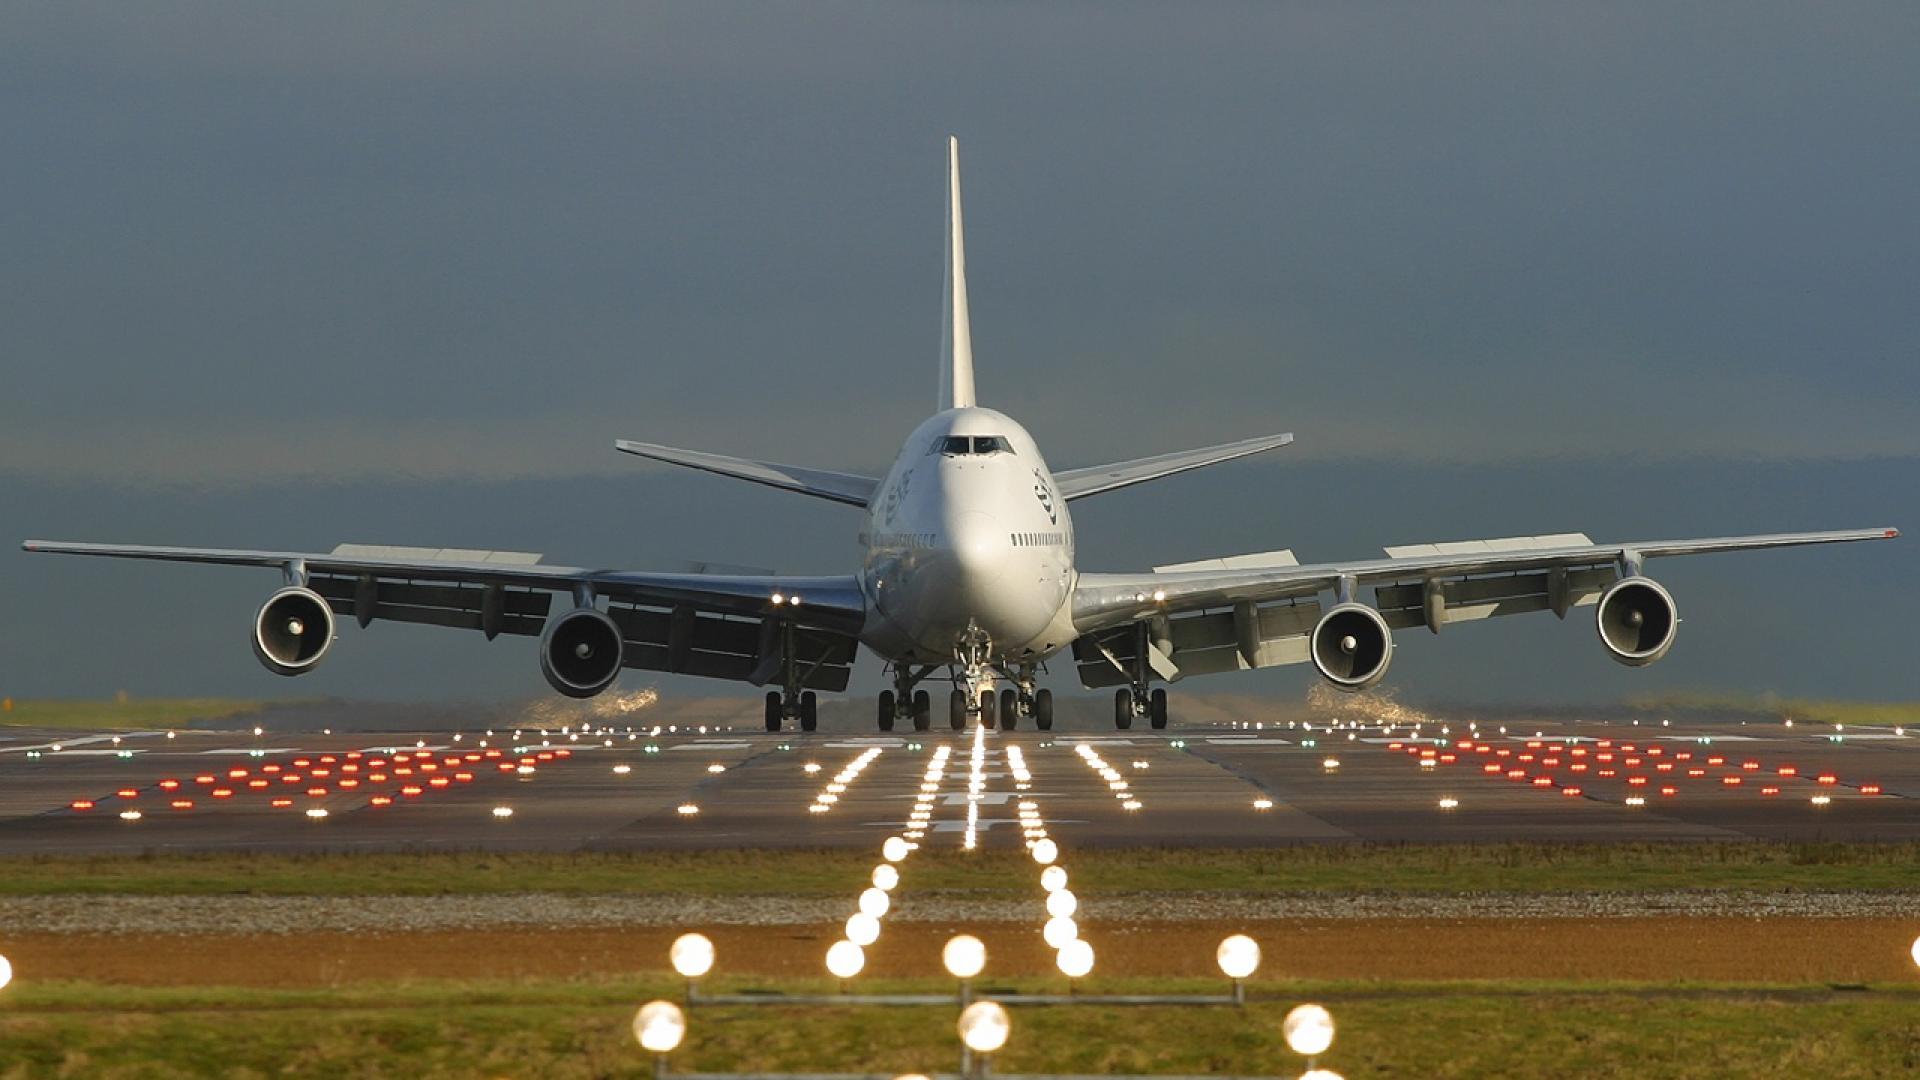 Авиатранспорт. Боинг 747 посадка. Самолет посадка Боинг 747. Боинг 747 приземлился. Боинг 747 взлетает.